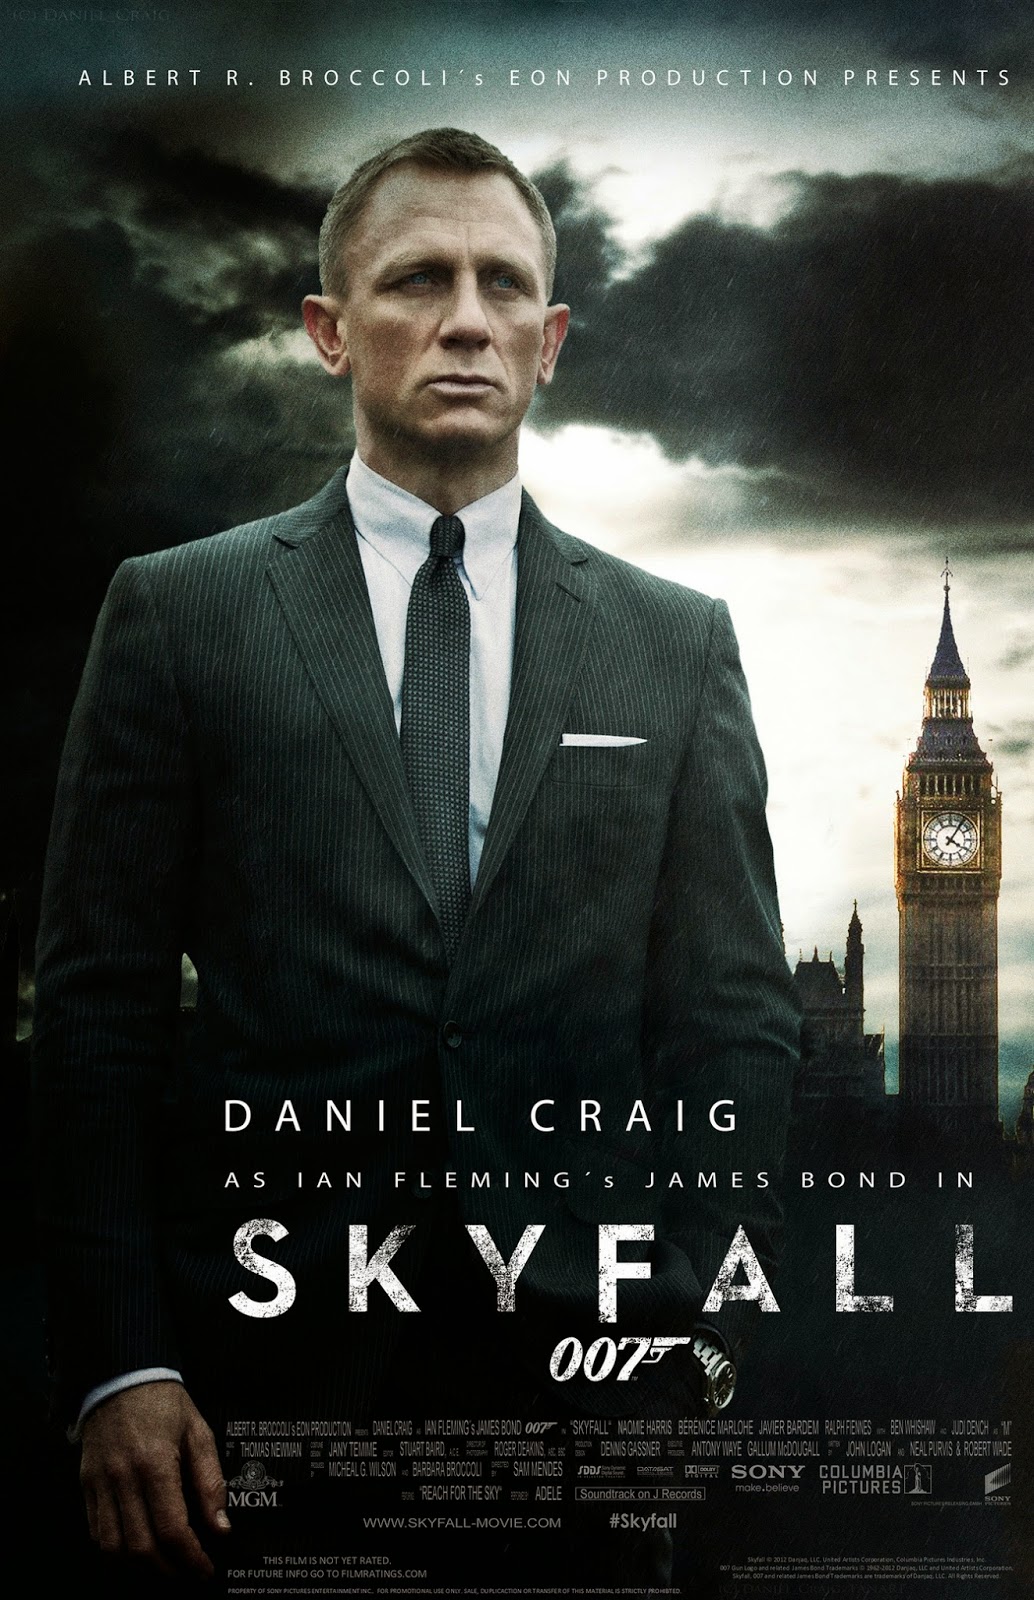 007 TRAVELERS: 007 Film: Skyfall (2012)